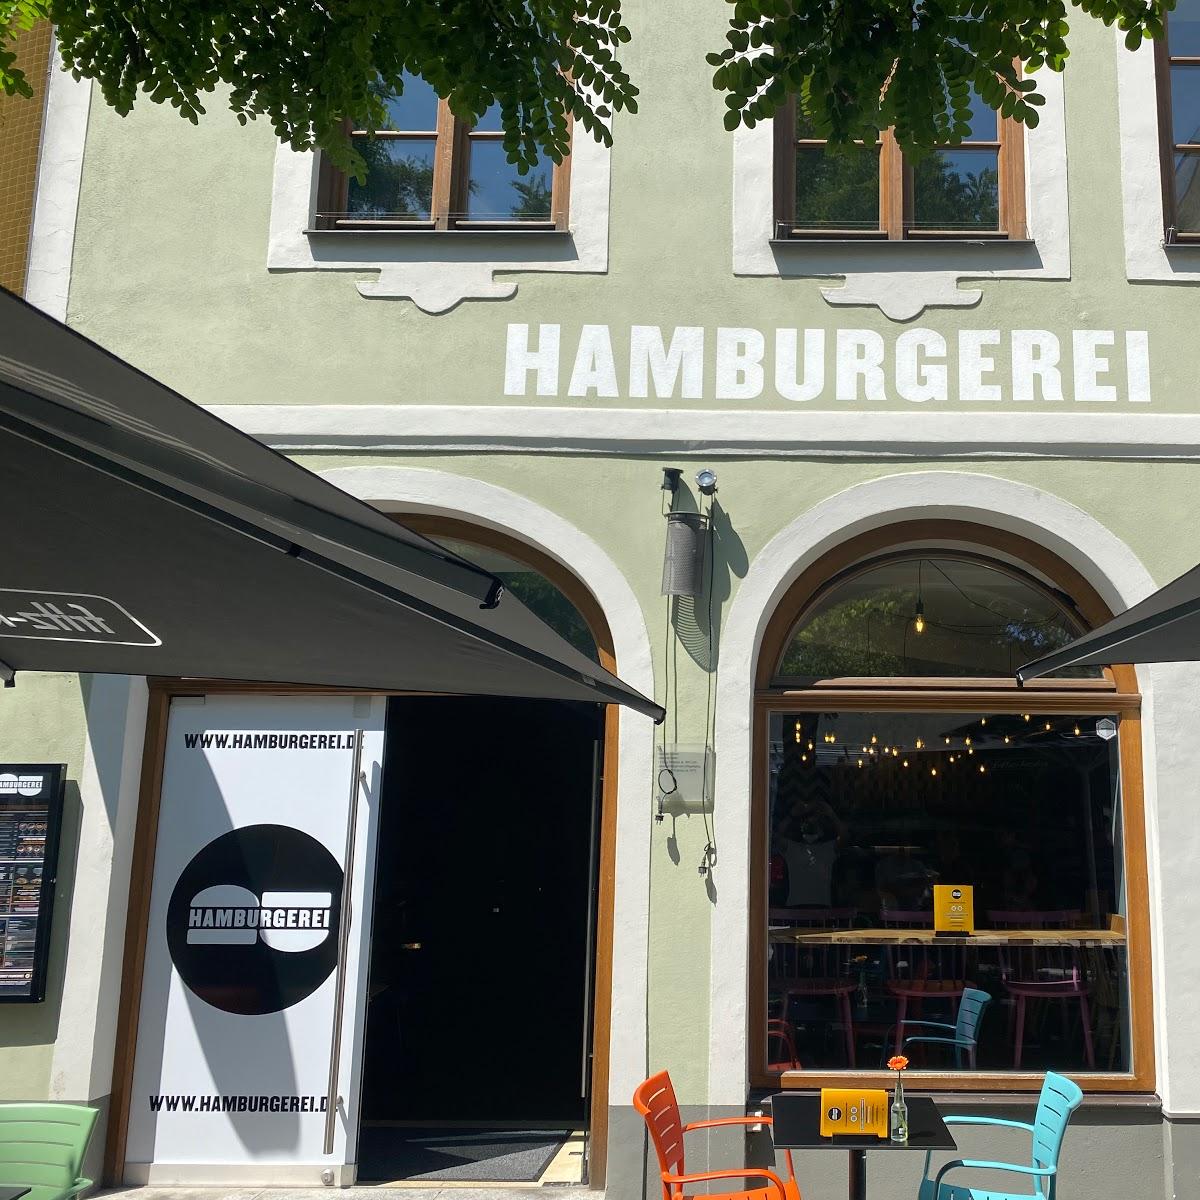 Restaurant "Hamburgerei" in Ingolstadt